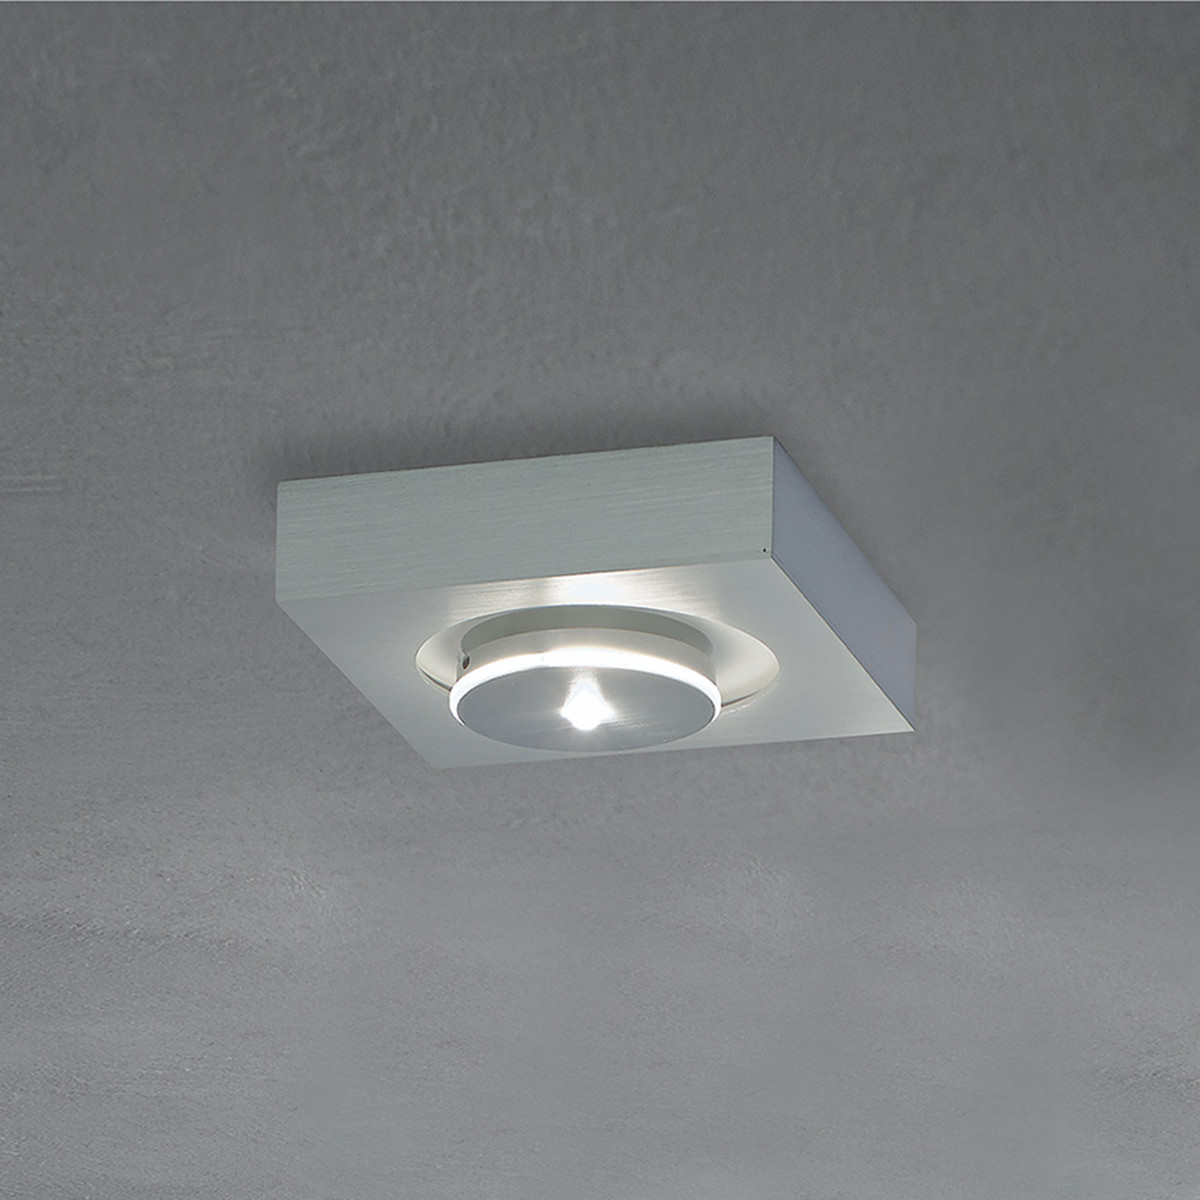 Escale Spot It LED Deckenleuchte Preisvergleich 1-flammig | € 348,99 quadratisch bei Aluminium ab geschliffen